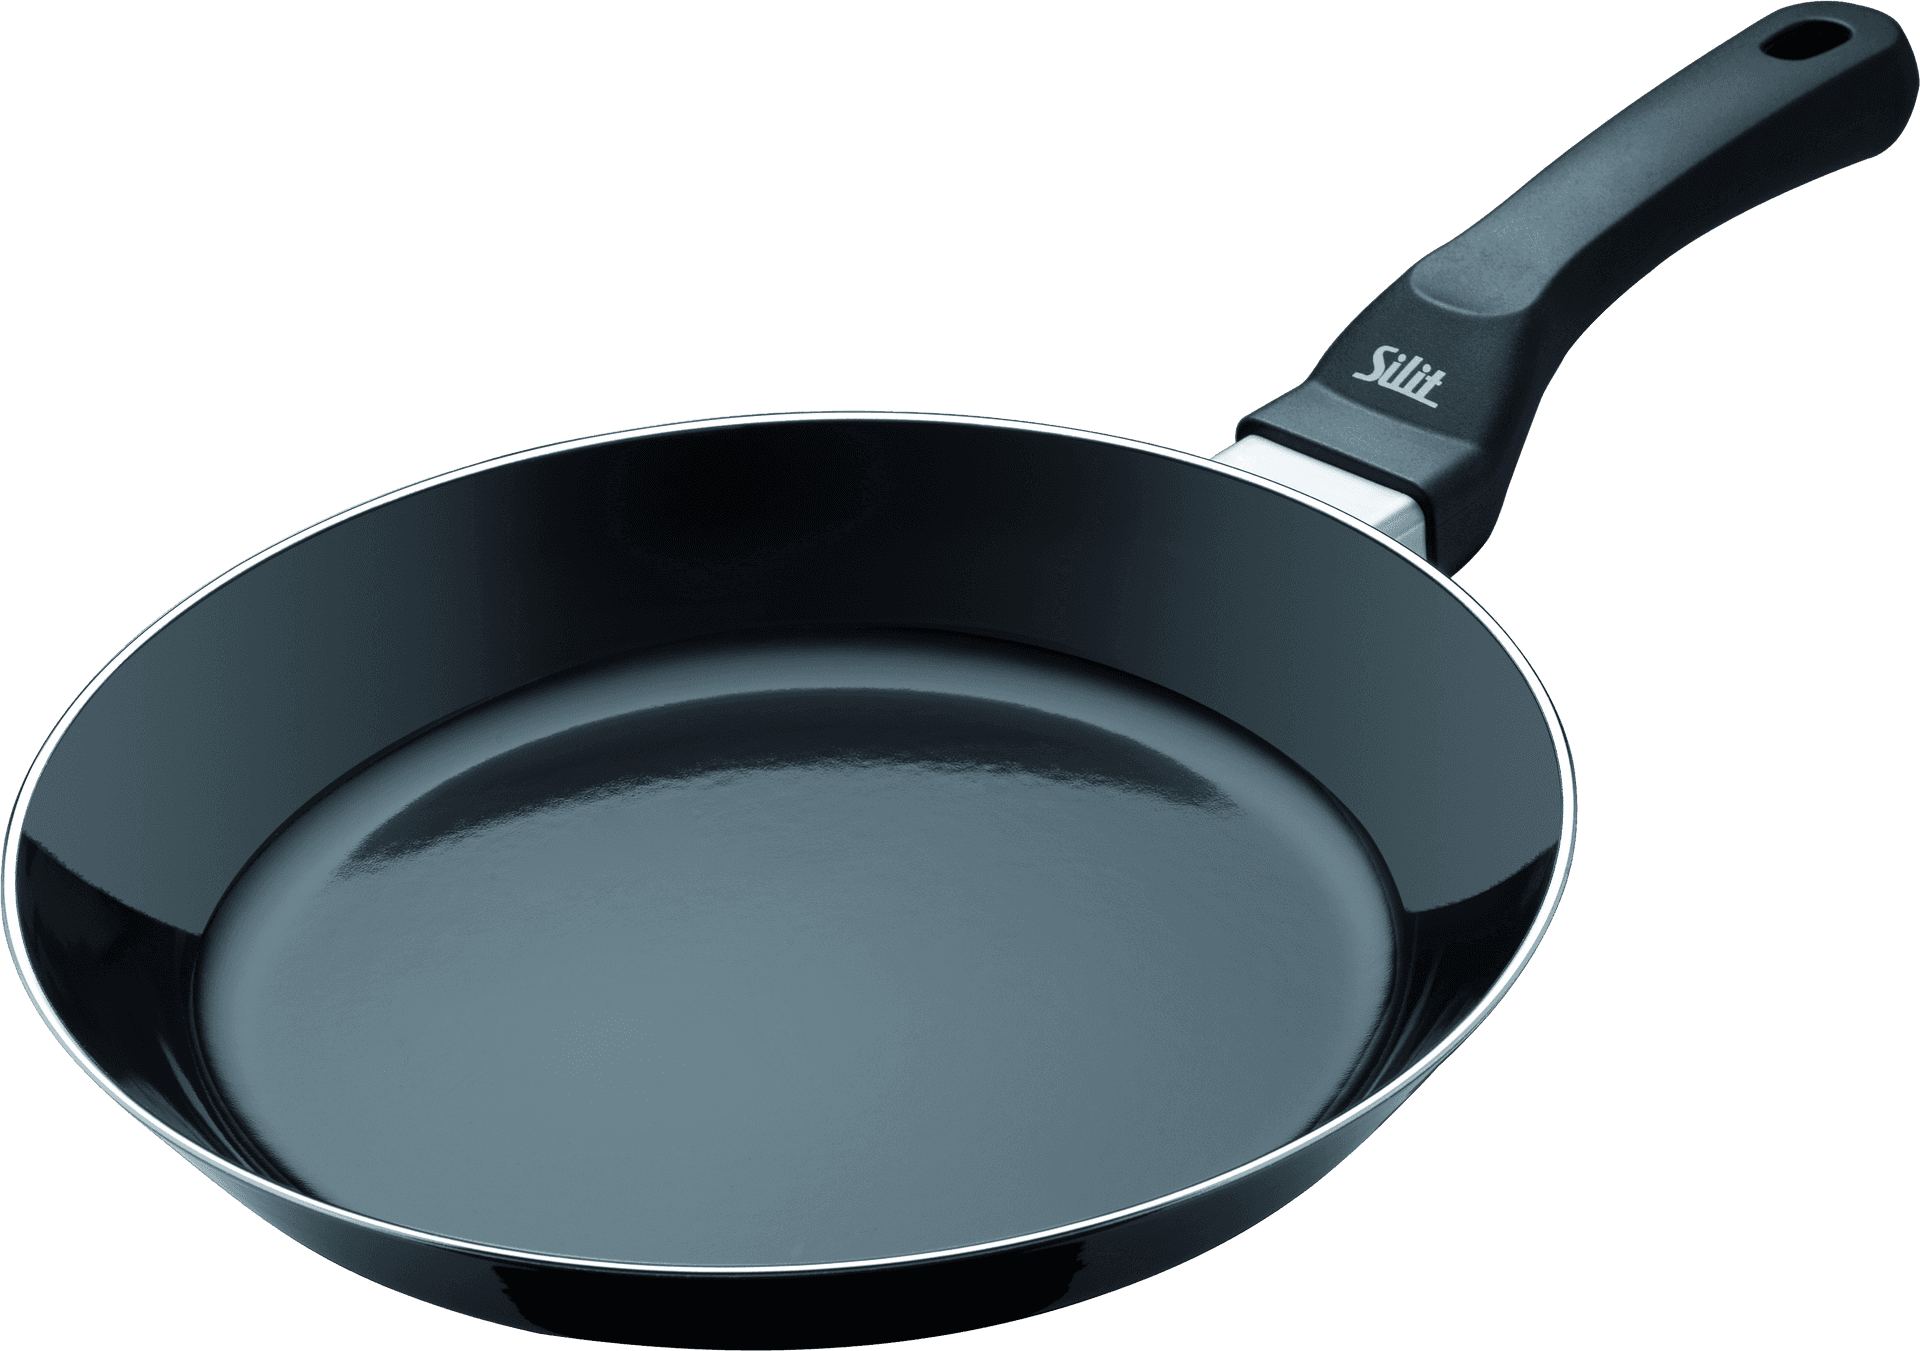 Black Nonstick Frying Pan PNG